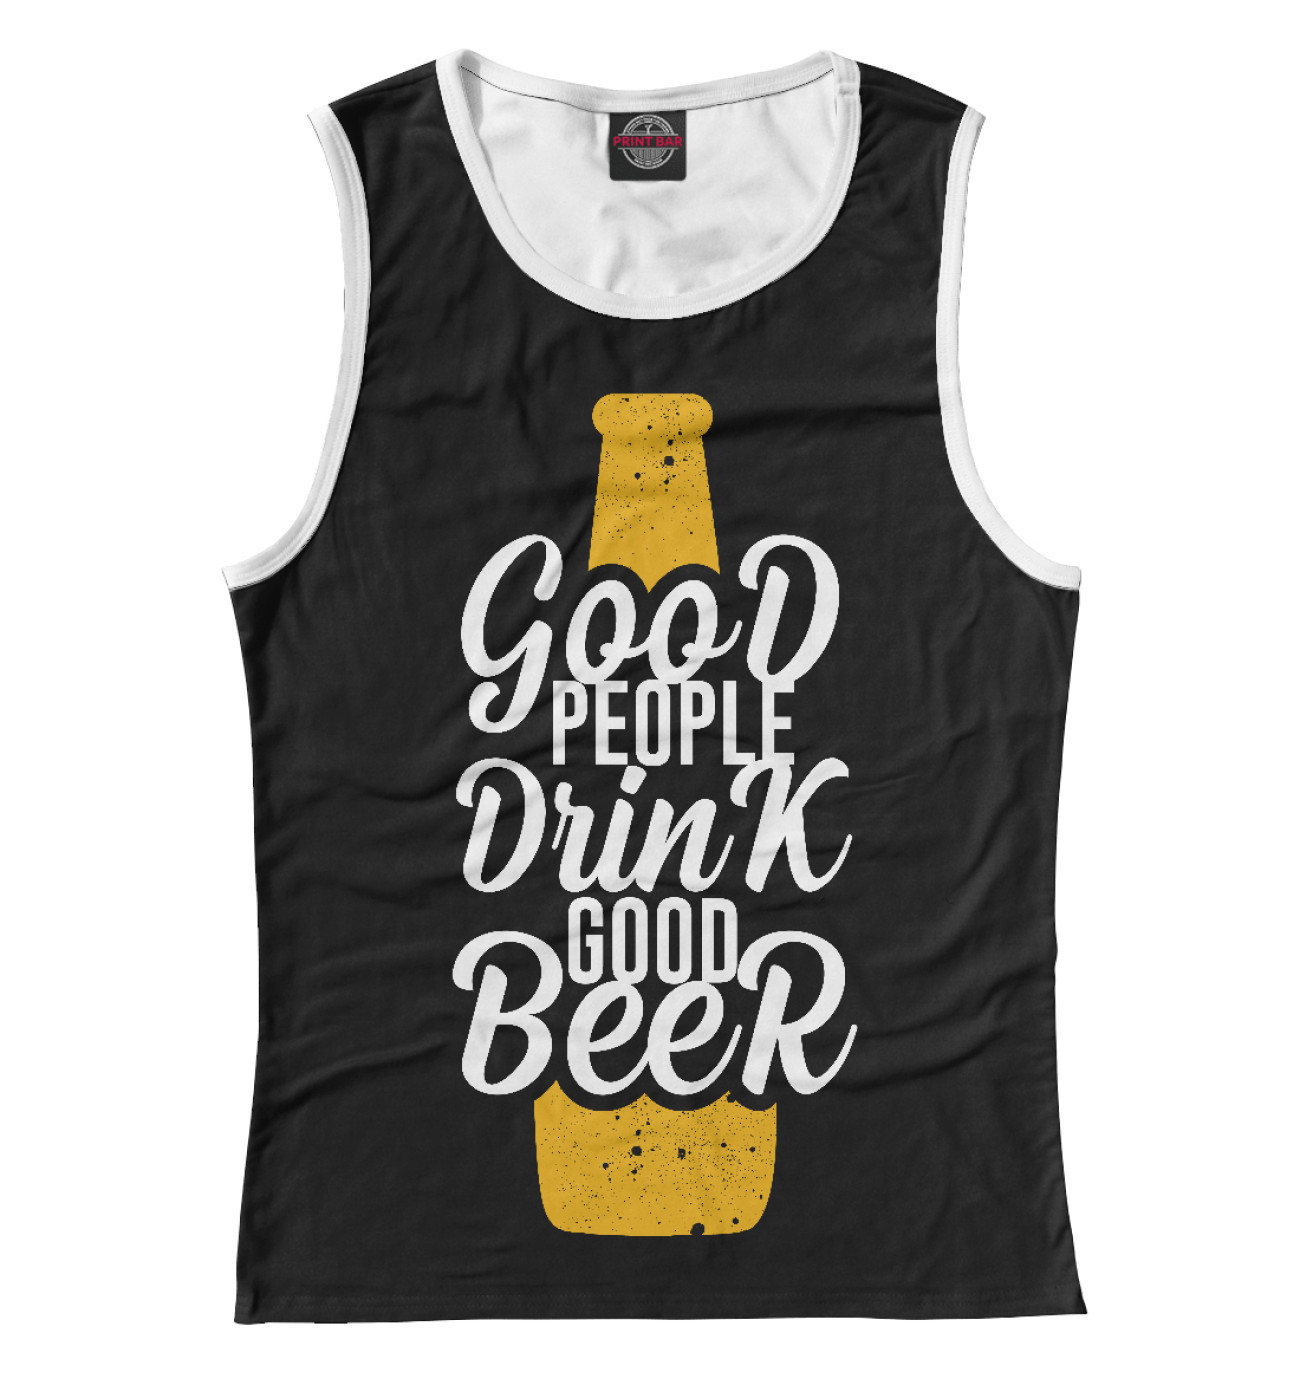 Женская Майка Good people drink good beer, артикул: PIV-214448-may-1